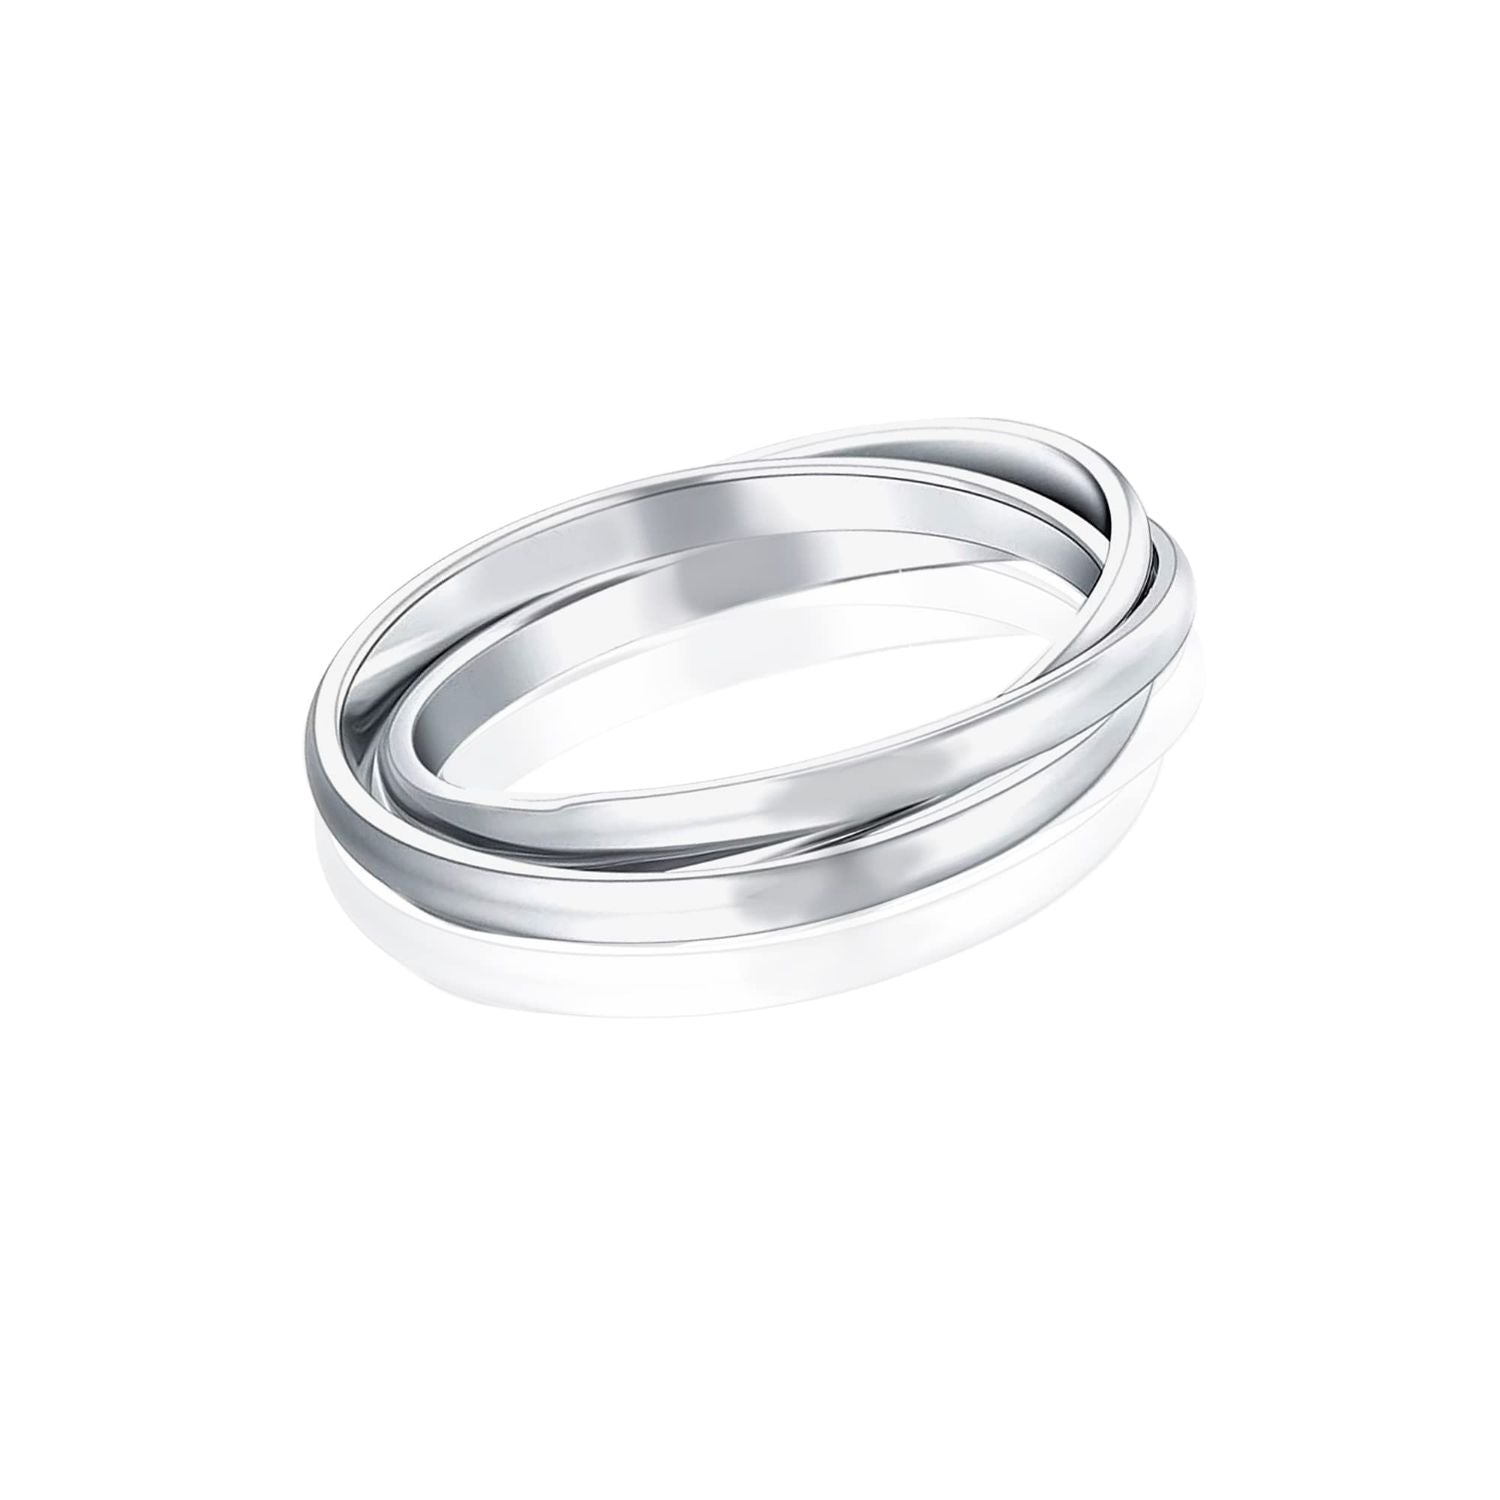 925 Sterling Silver Triple Band Interlocking Finger Ring for Women Teen